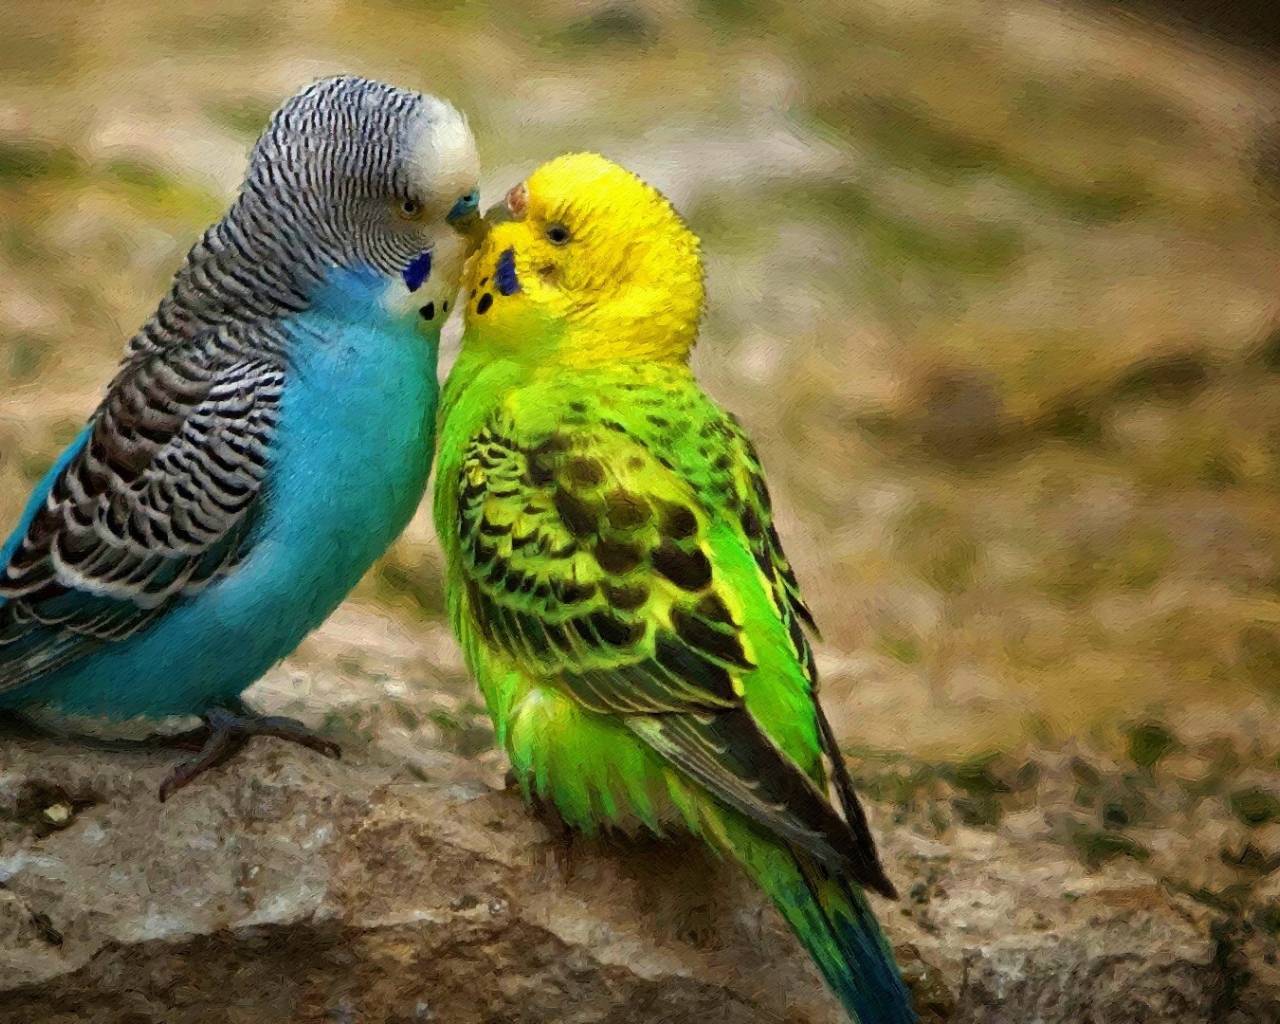 A pair of exotic parrots